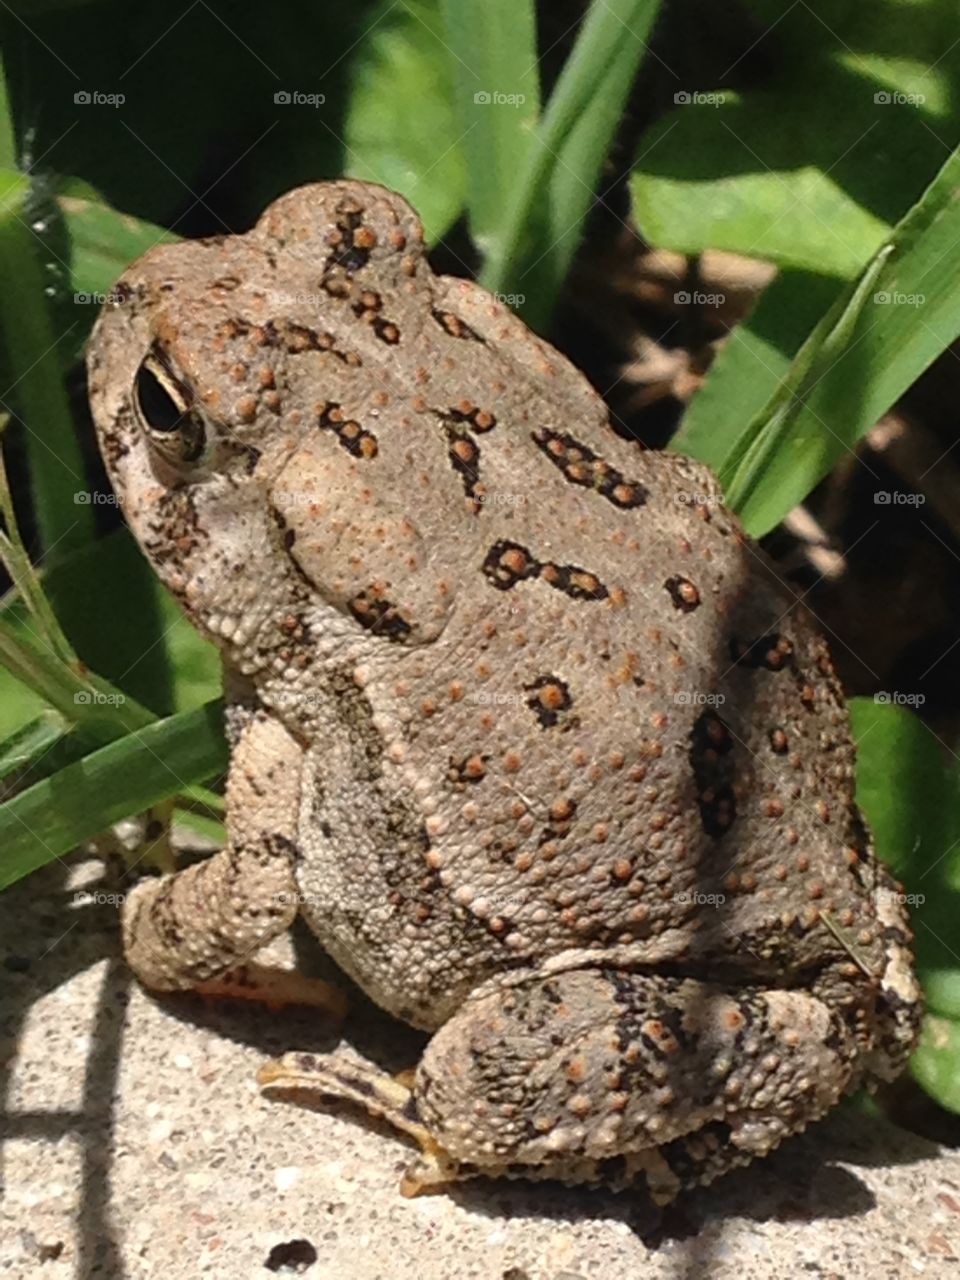 Frog pose. Frog in backyard